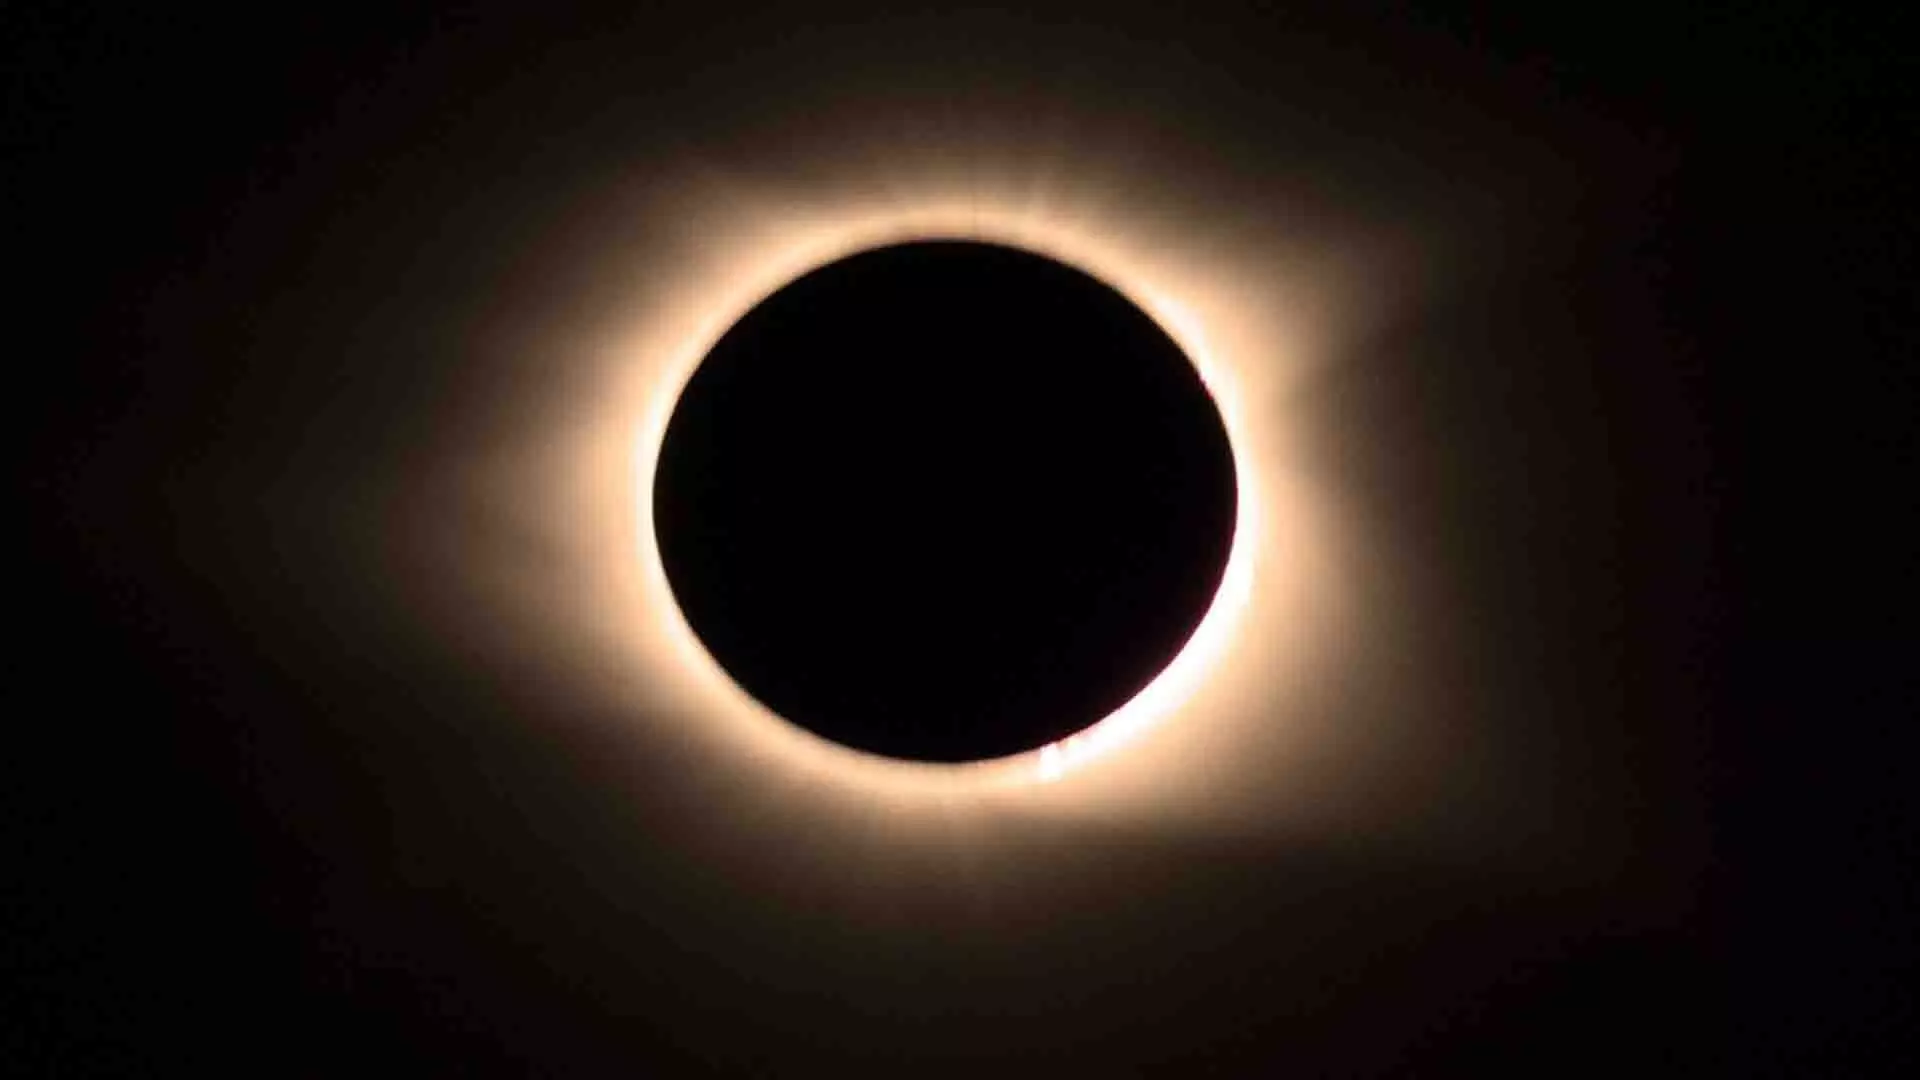 सूर्य ग्रहण अमेरिकी विमानन एजेंसी ने दुर्लभ खगोलीय घटना से पहले यात्रा चेतावनी जारी की